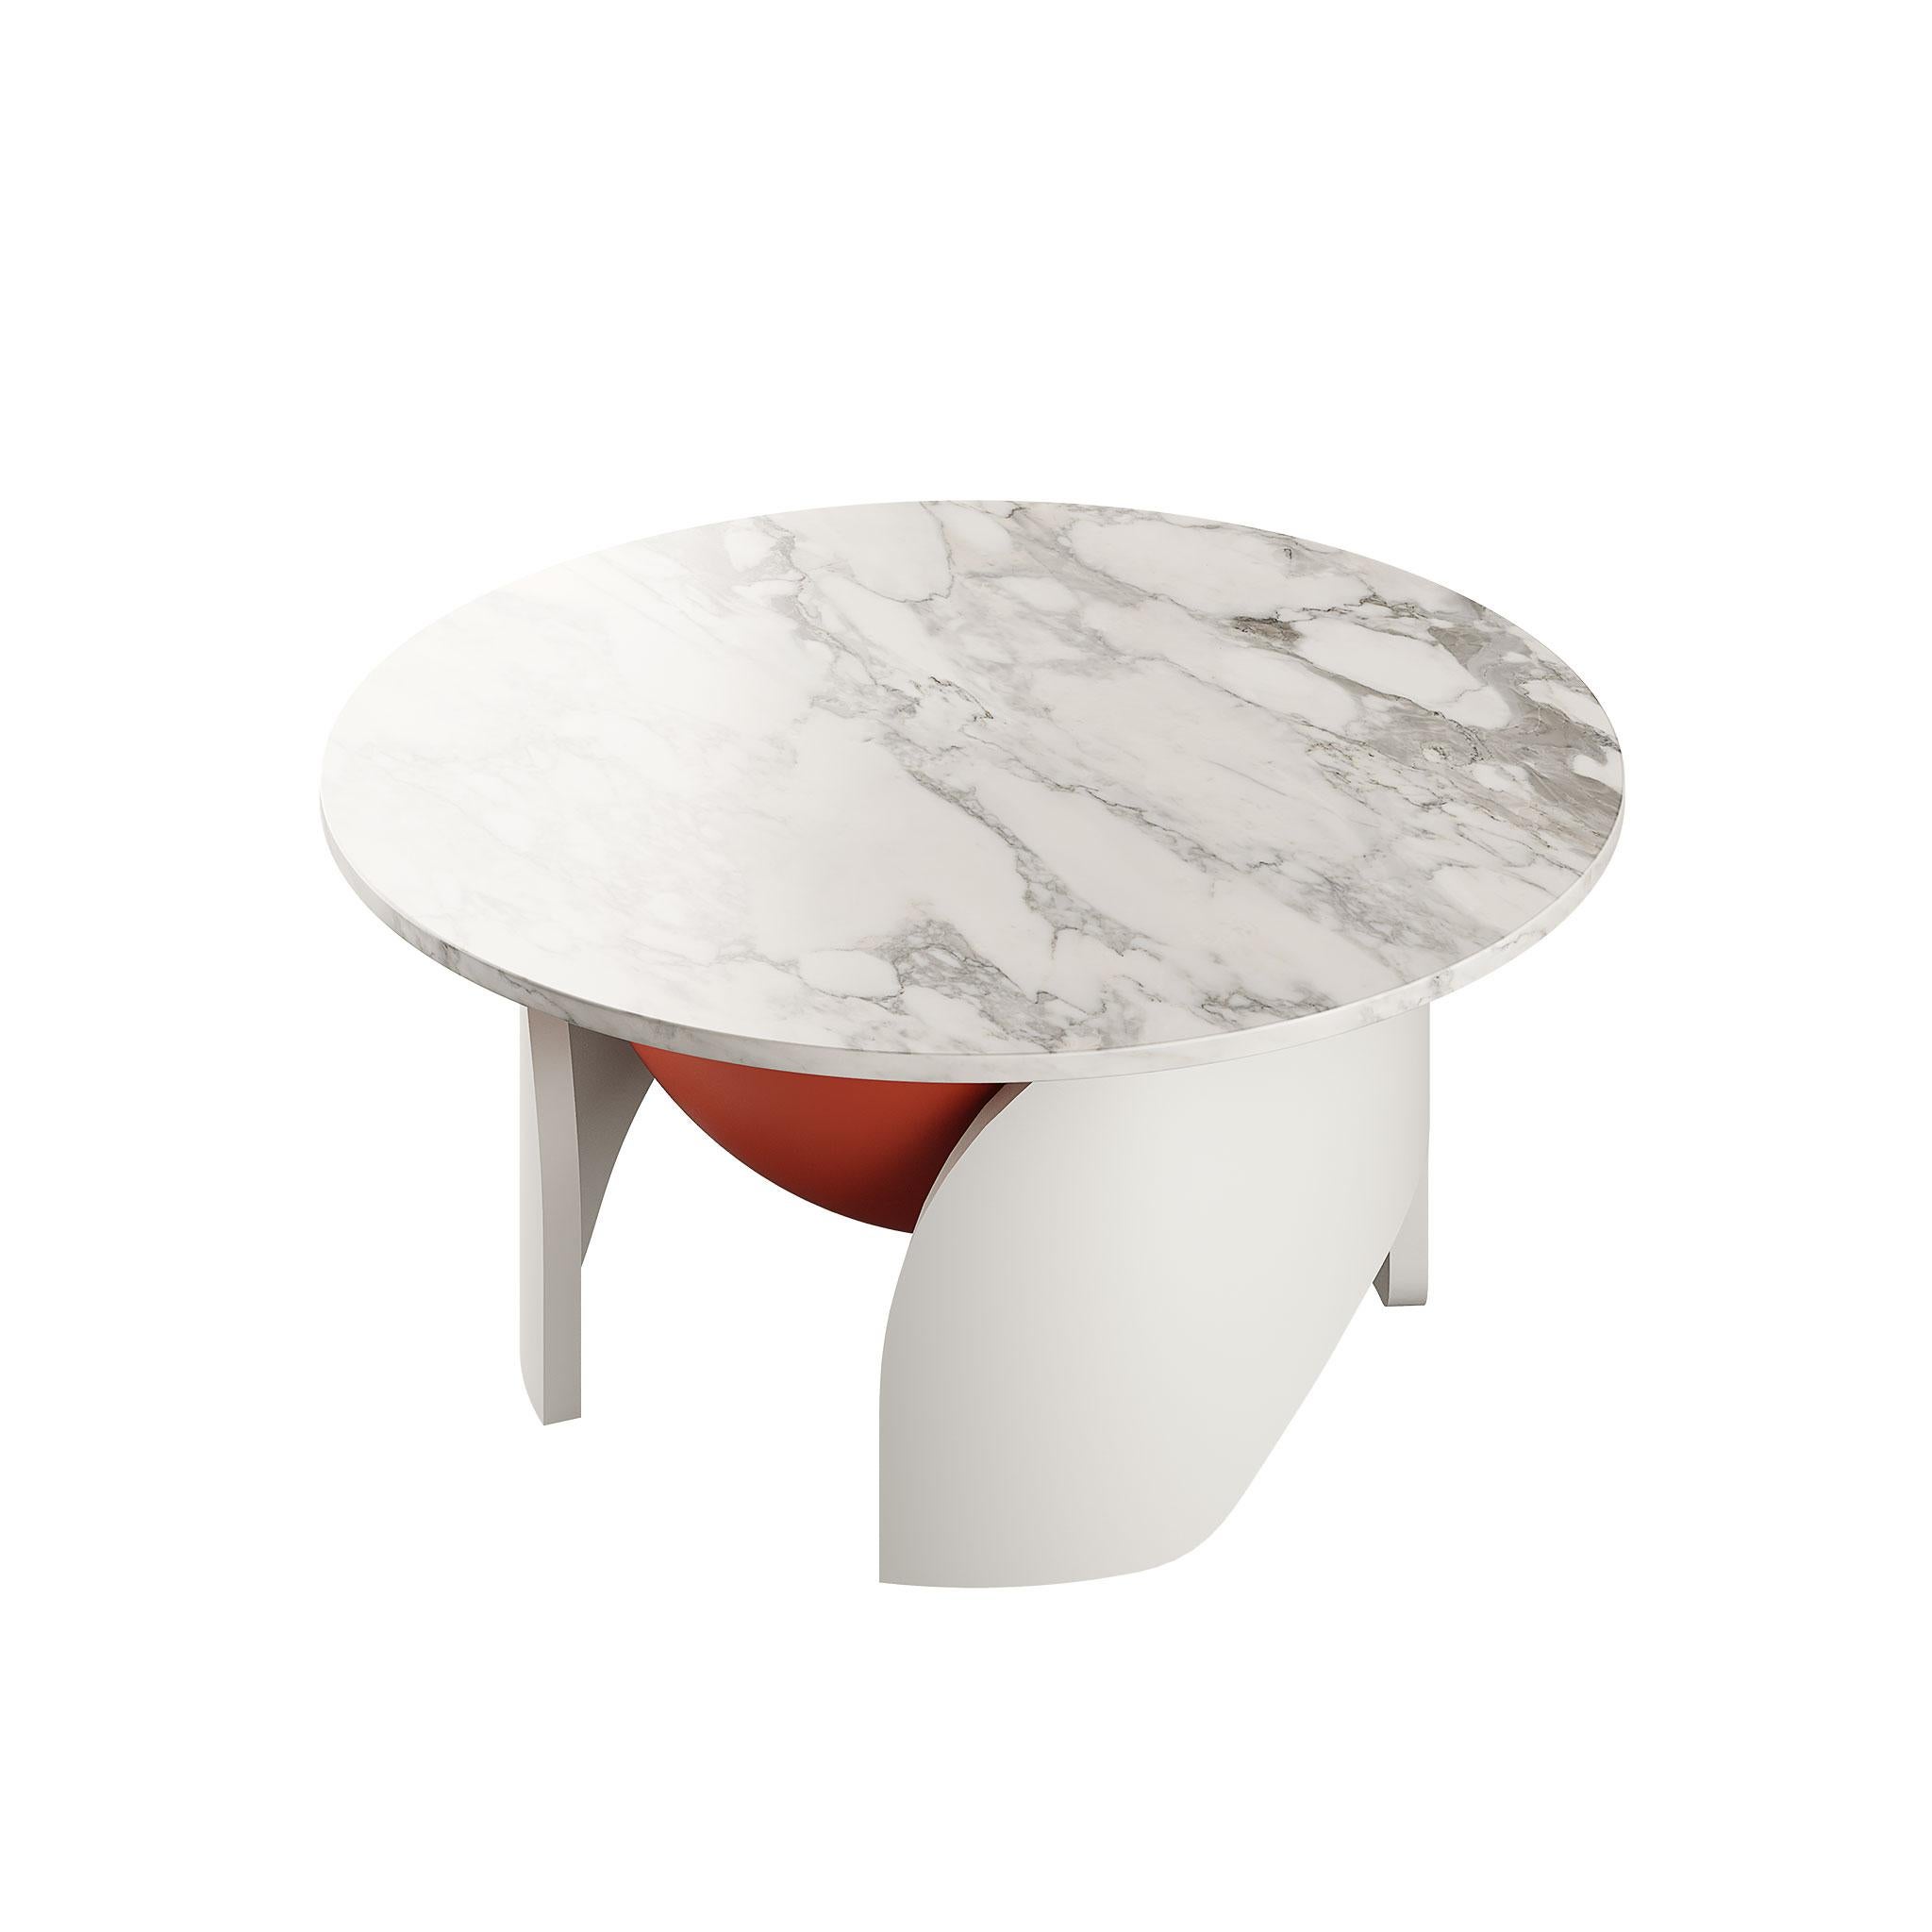 European Modern Round Center Table Calacatta White Marble Top Grey & Orange Matte Lacquer For Sale